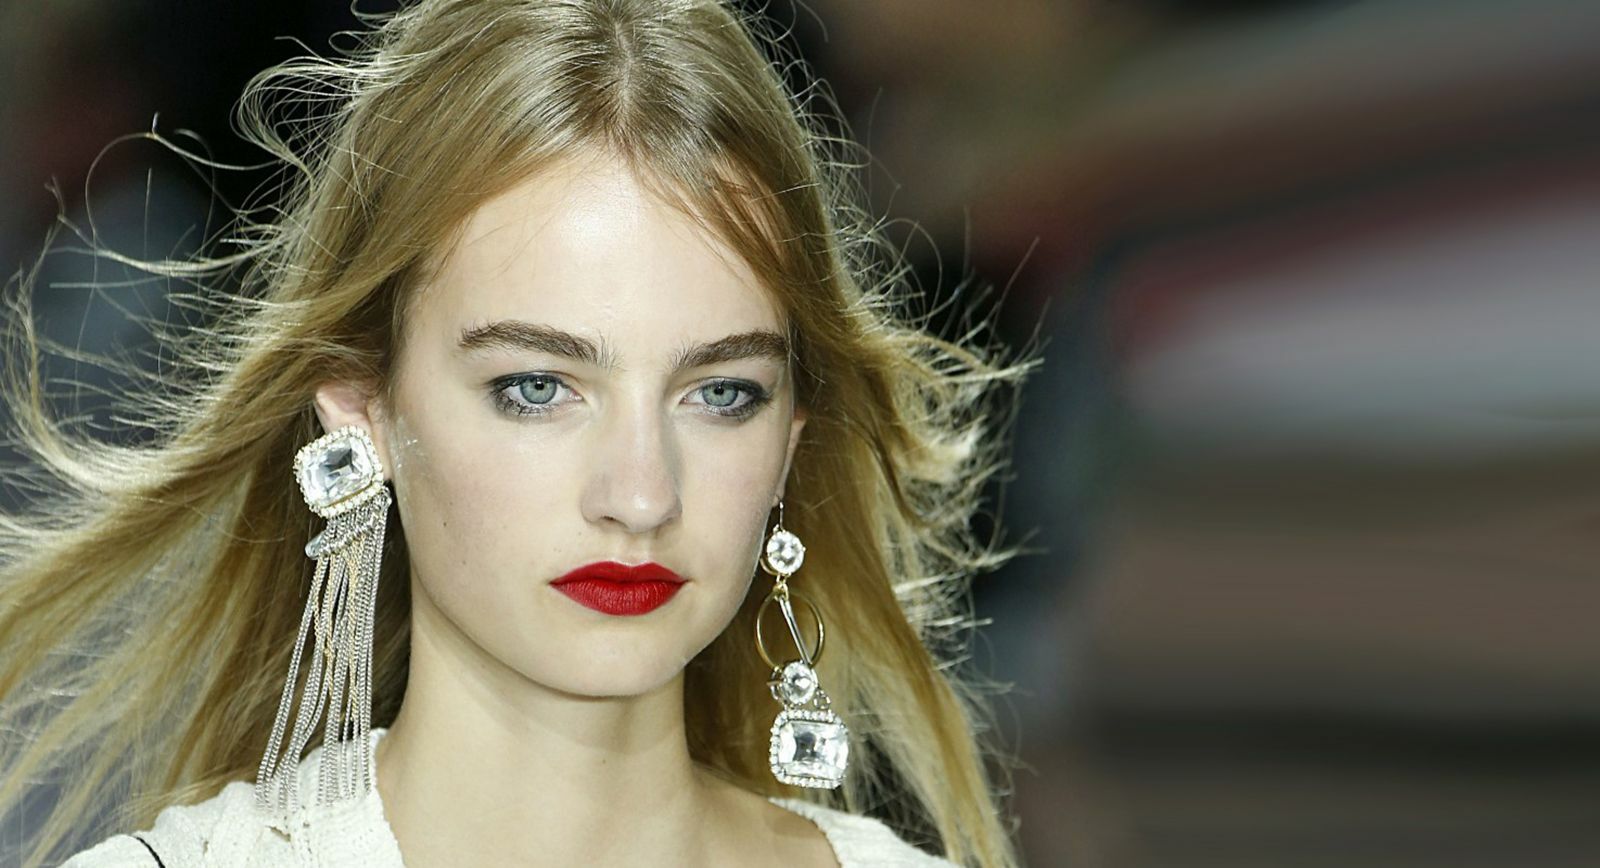 Trend Alert: Mismatched Earrings